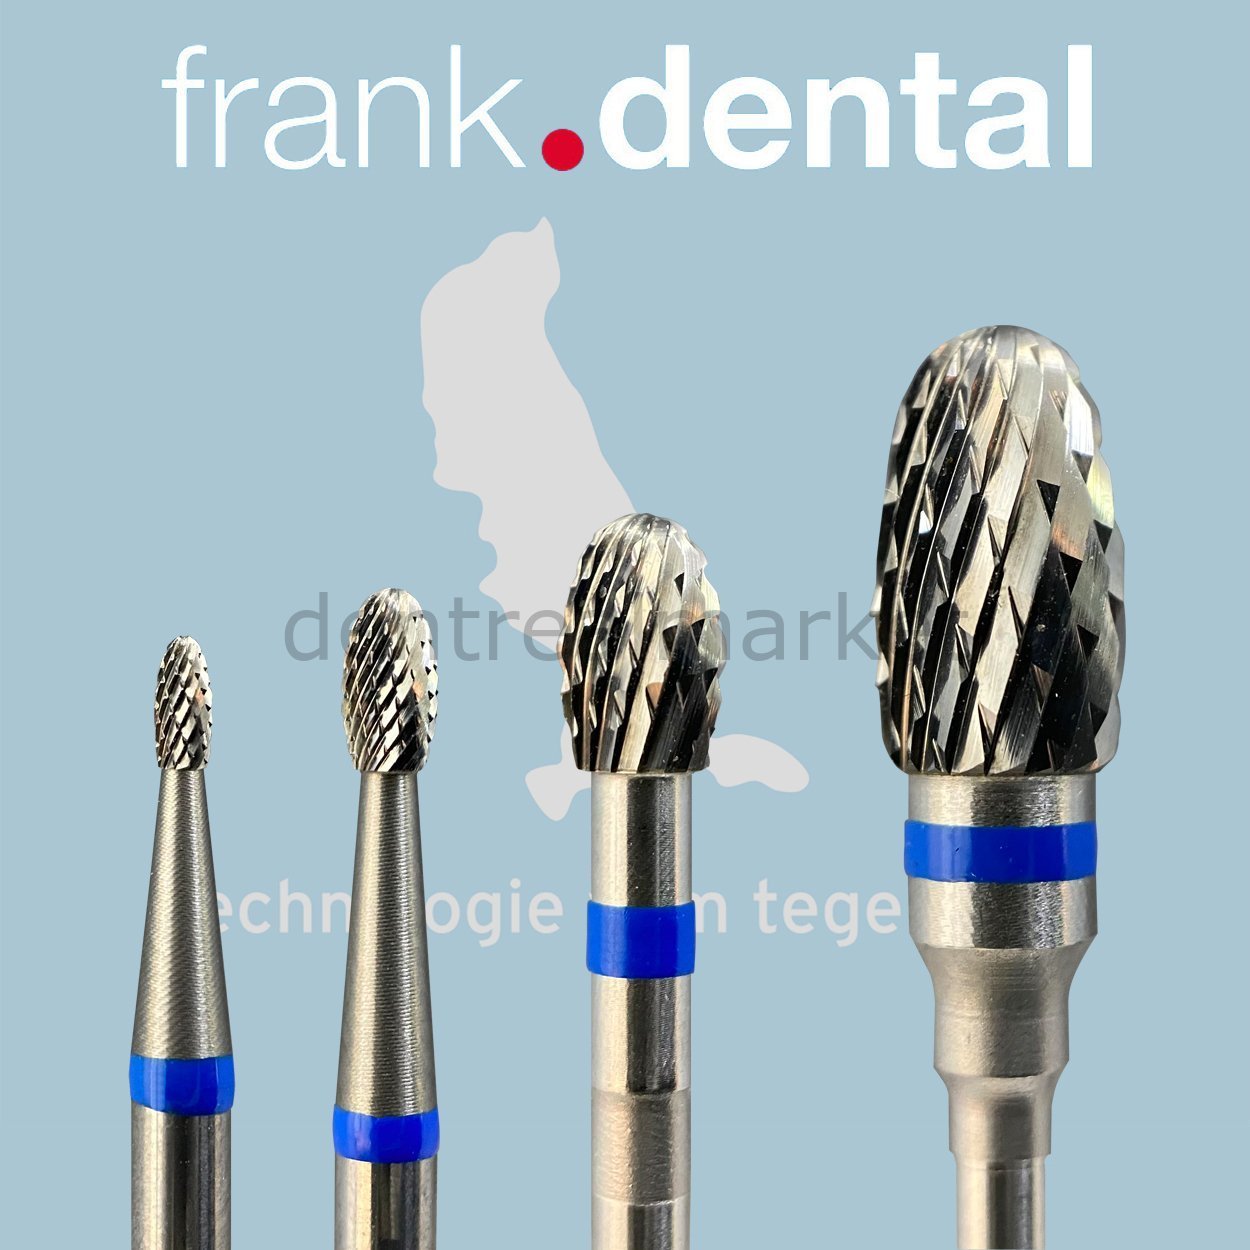 DentrealStore - Frank Dental Tungsten Carpide Monster Hard Burs - 73K